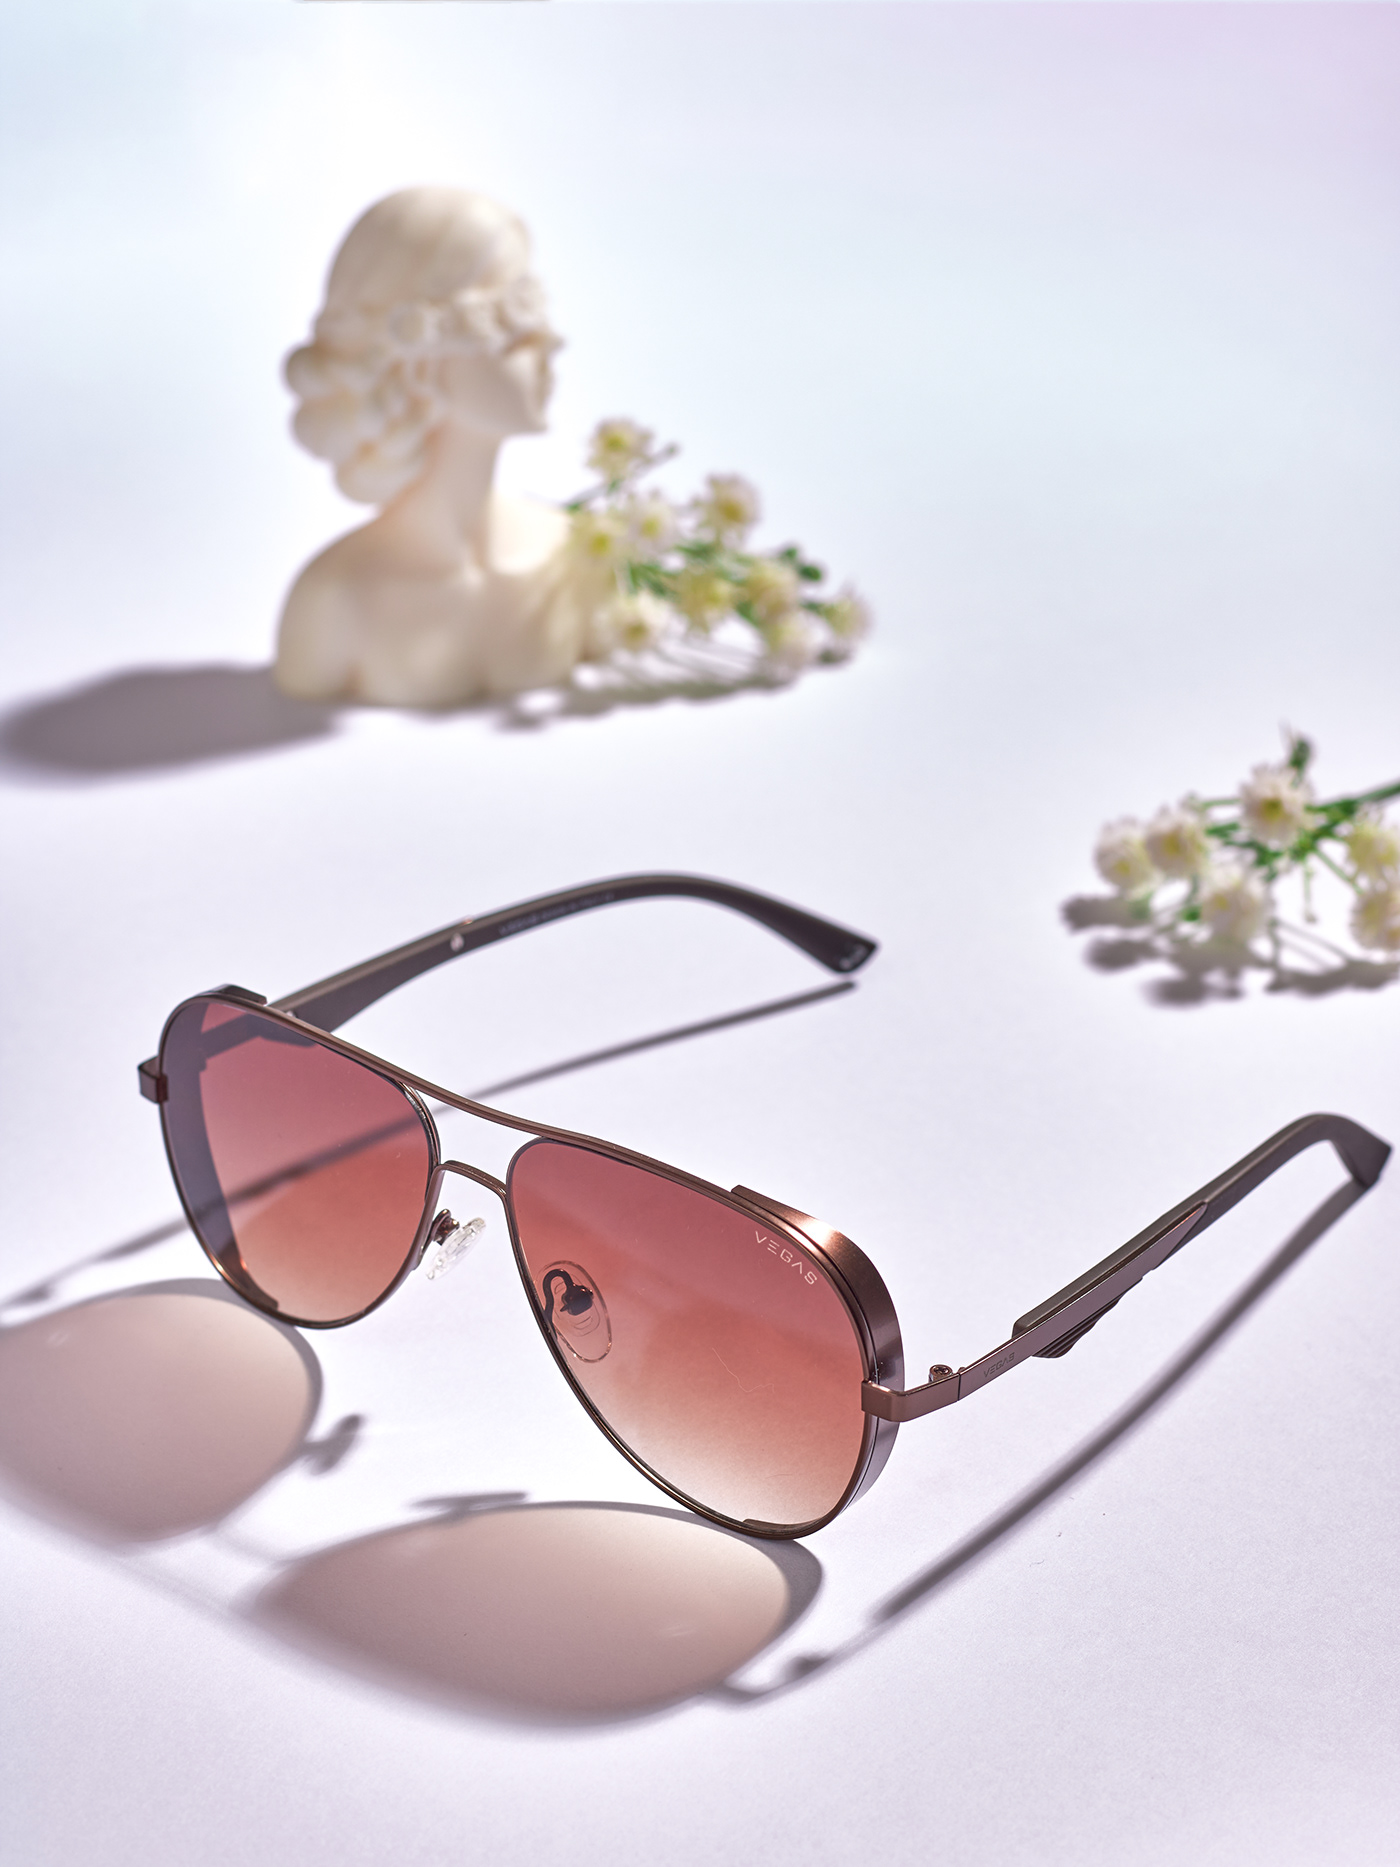 glasses goggles Sunglasses Accessory Fashion  Photography  photoshoot fashion photography styling  Product Photography